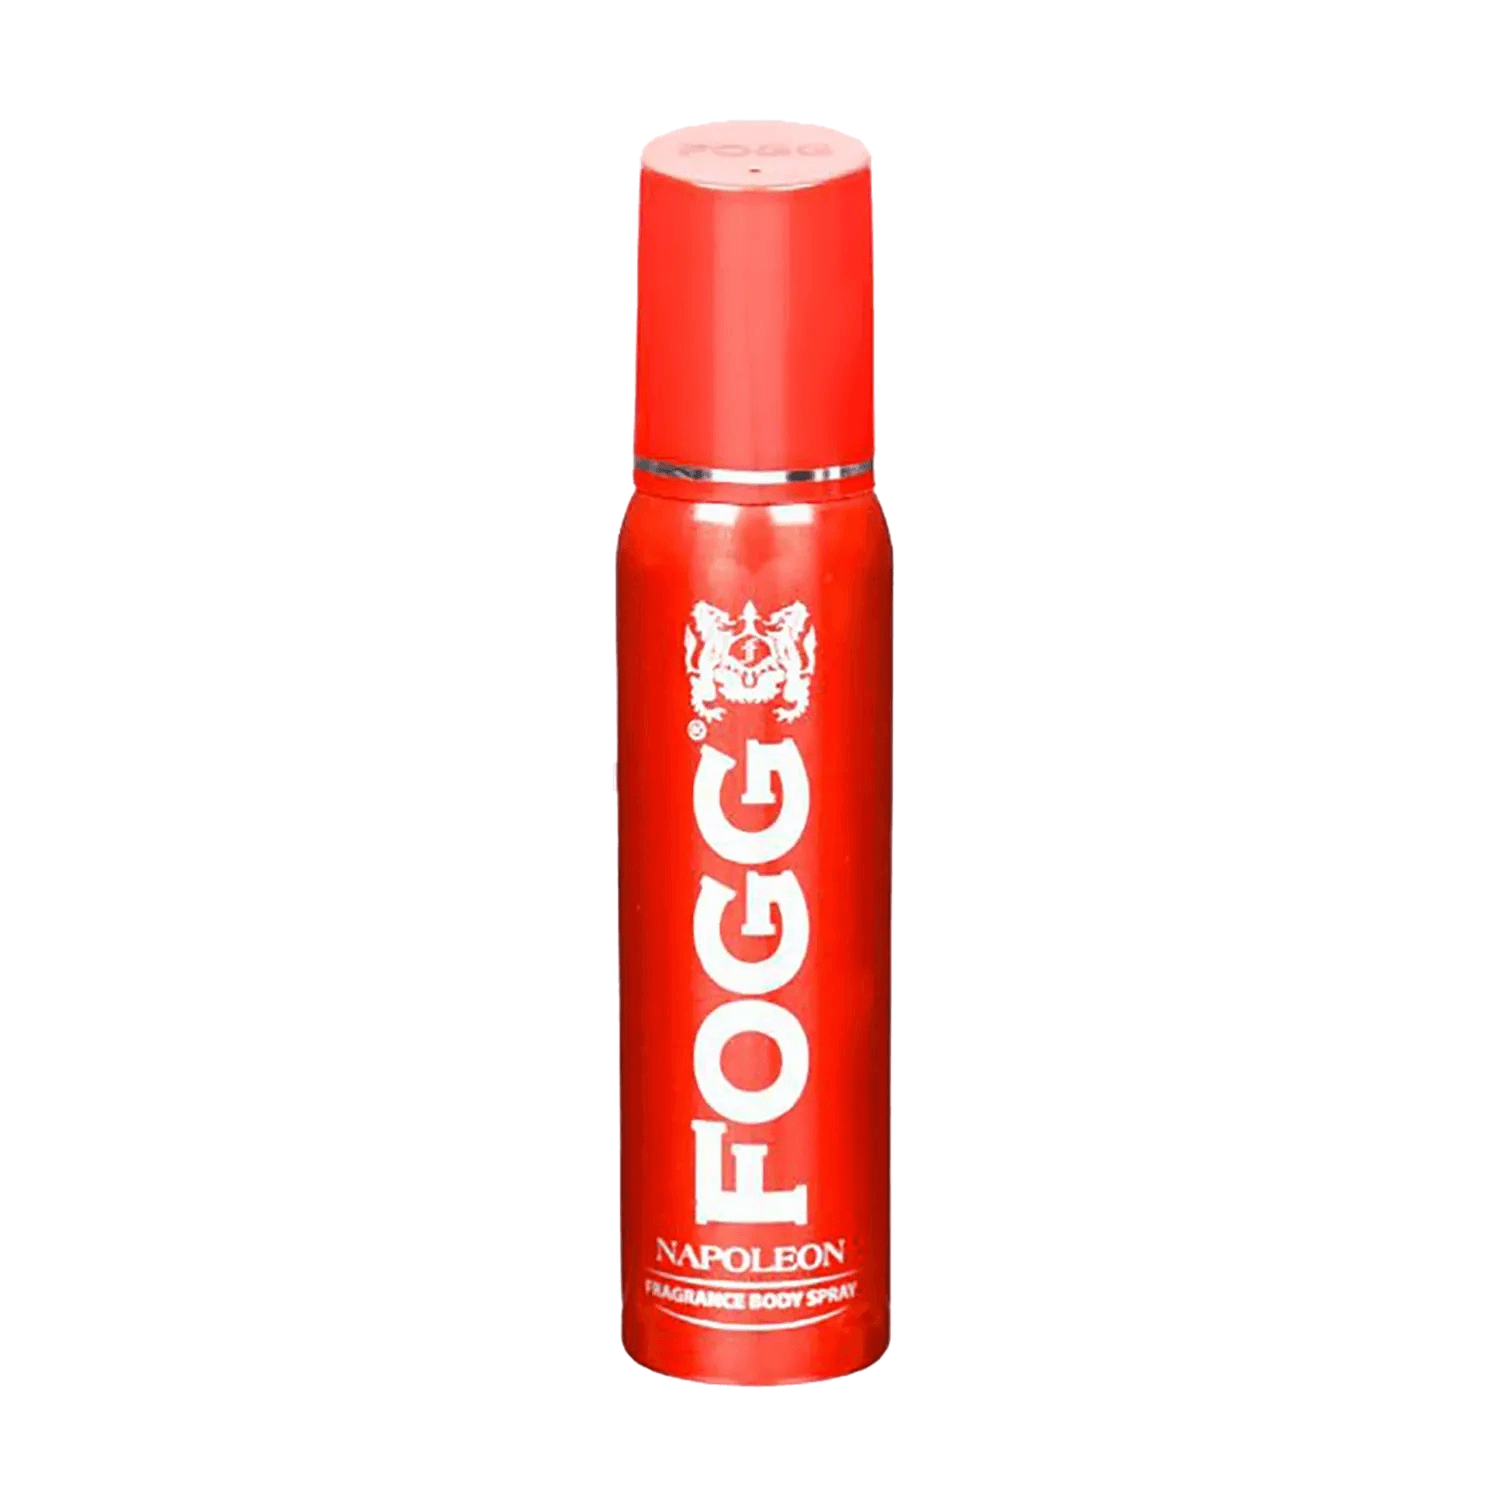 FOGG | FOGG Napleon Fragrance Body Spray (150ml)